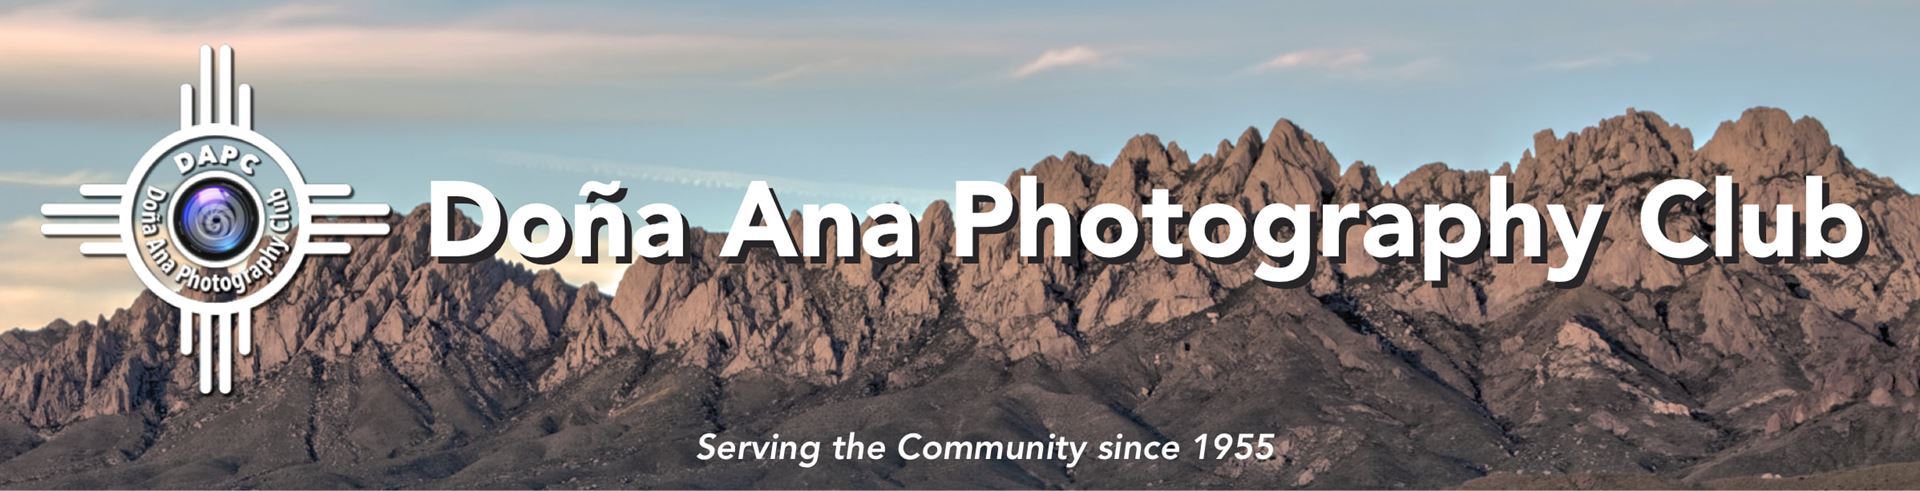 dona and photography club, dona ana photography, las cruces photography, las cruces photography club